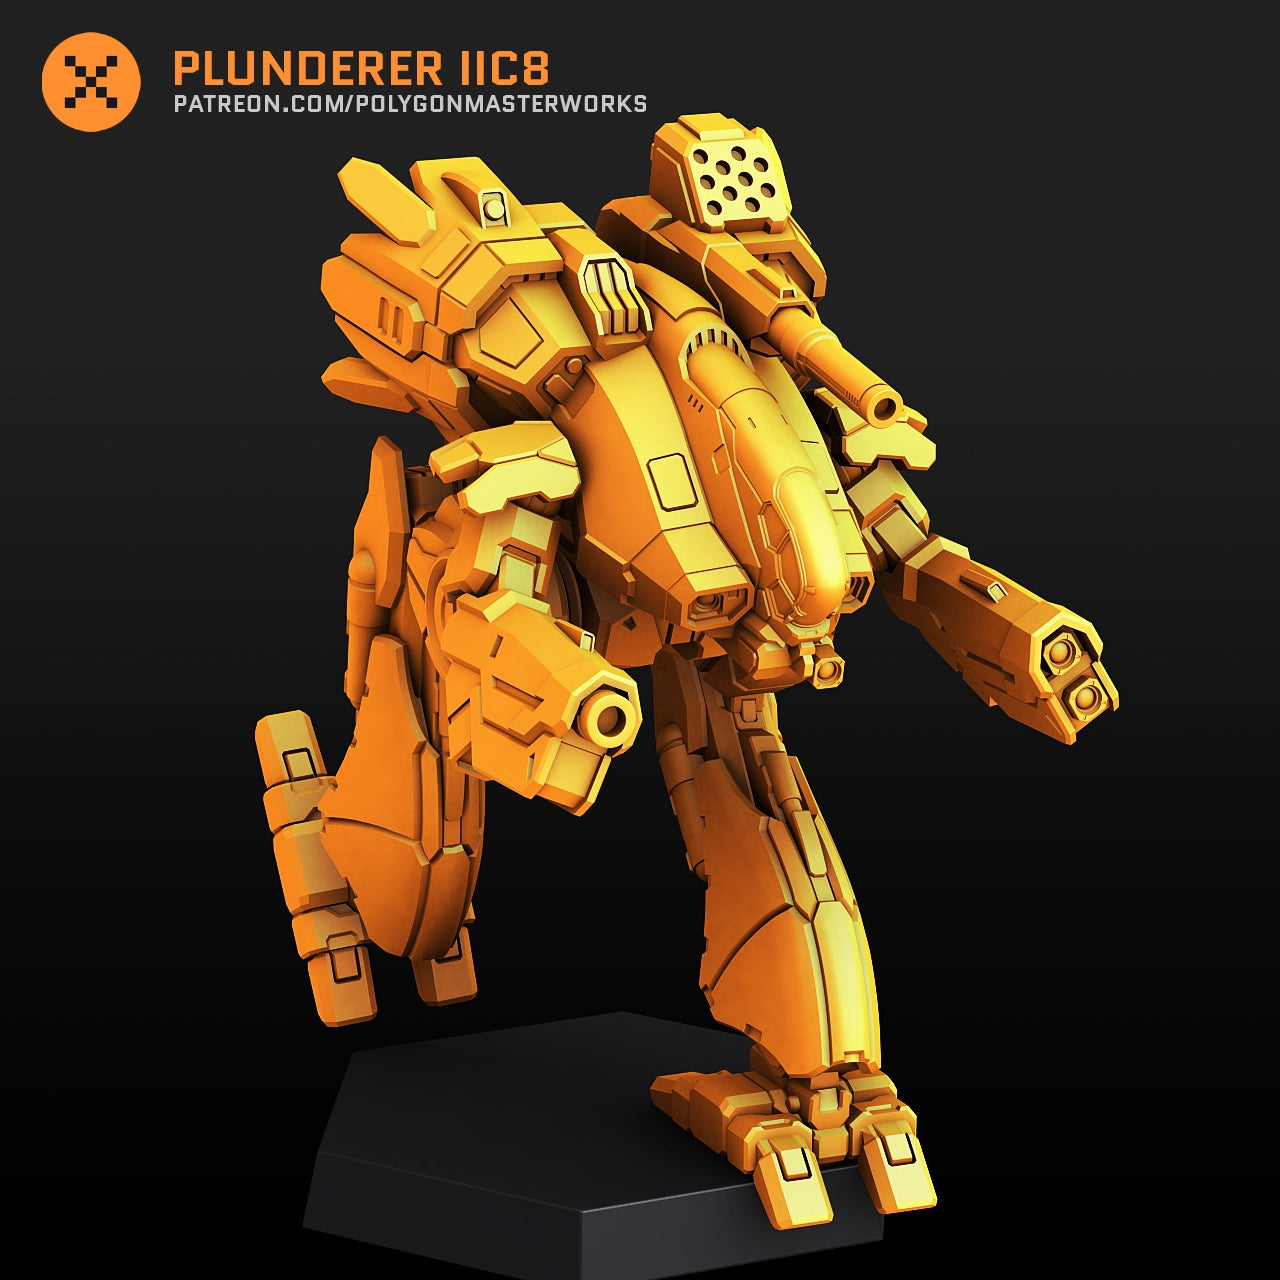 Plunderer IIC8 (By PMW) Alternate Battletech Mechwarrior Miniatures